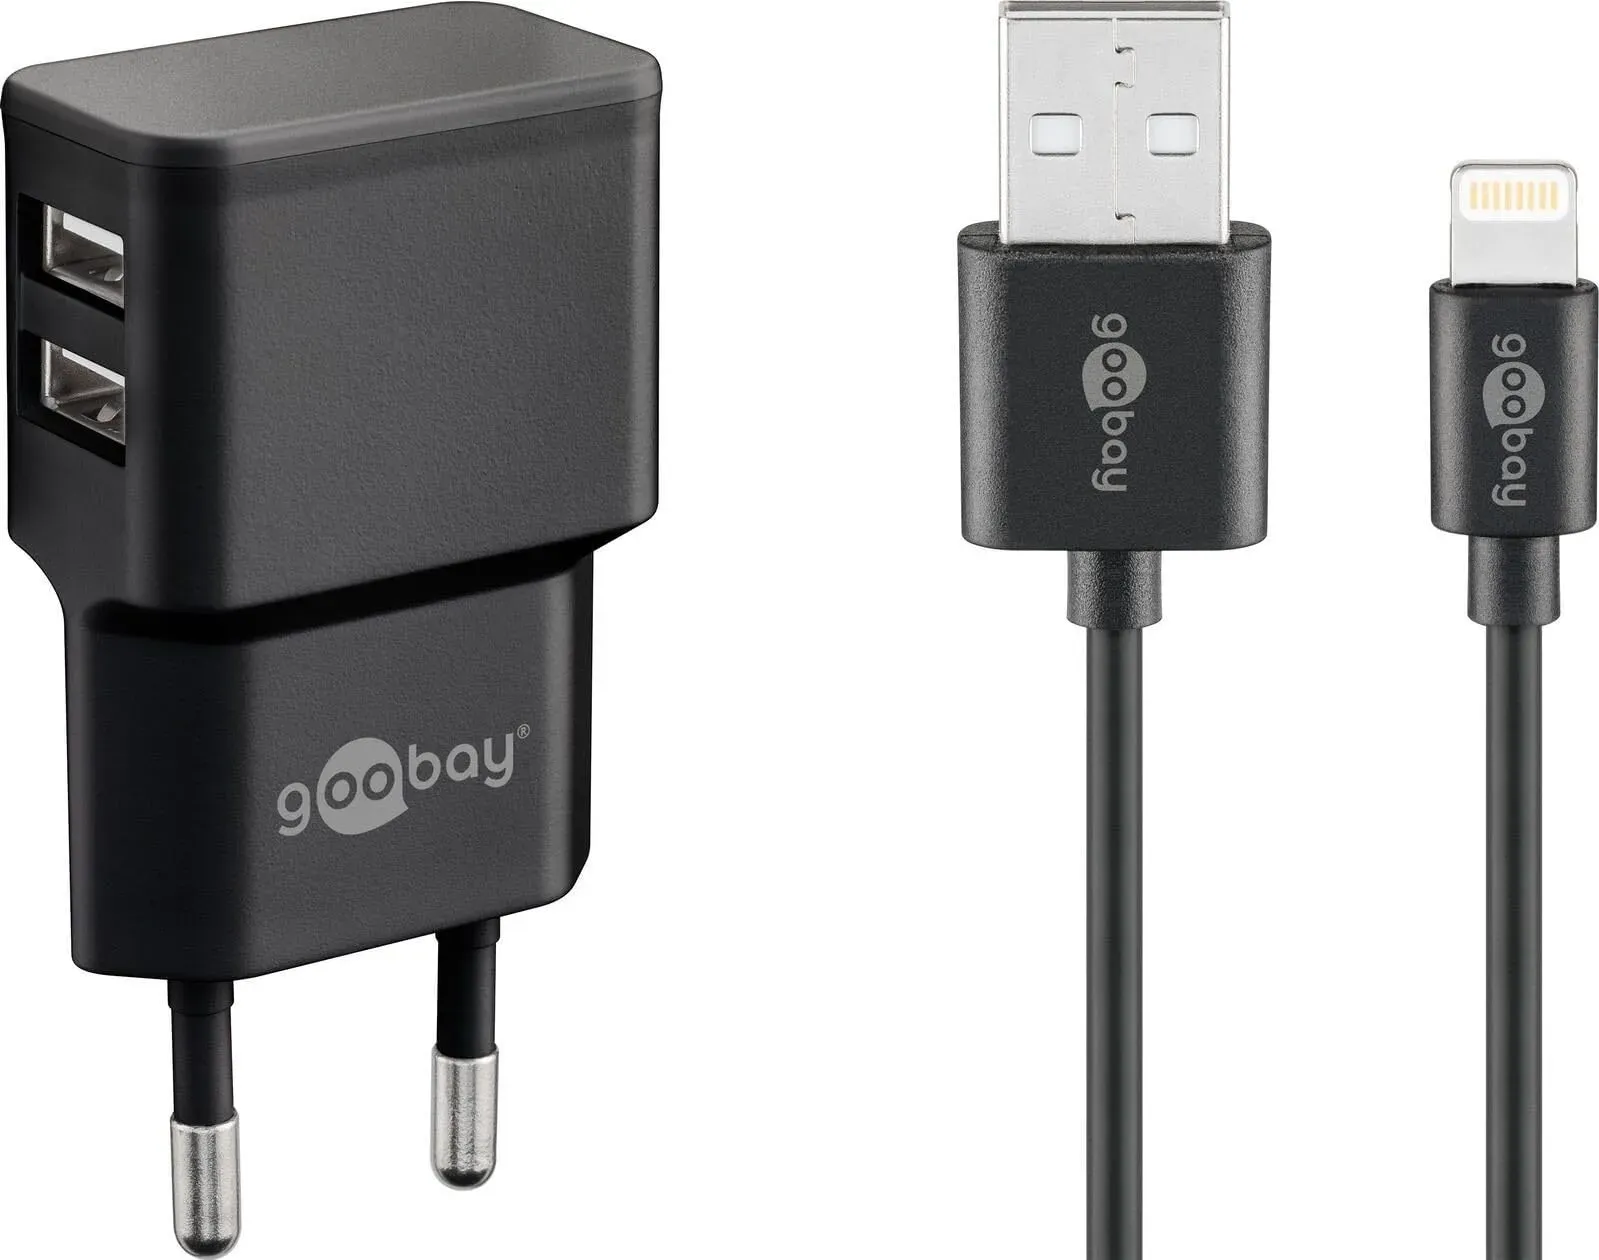 goobay 44995 USB Netzteil + Ladekabel Set / 2 Port Adapter für Steckdose 2,4 A (12W) USB-Netzteil mit Schutzelektronik/inkl. 1m Lightning Kabel/Schwarz